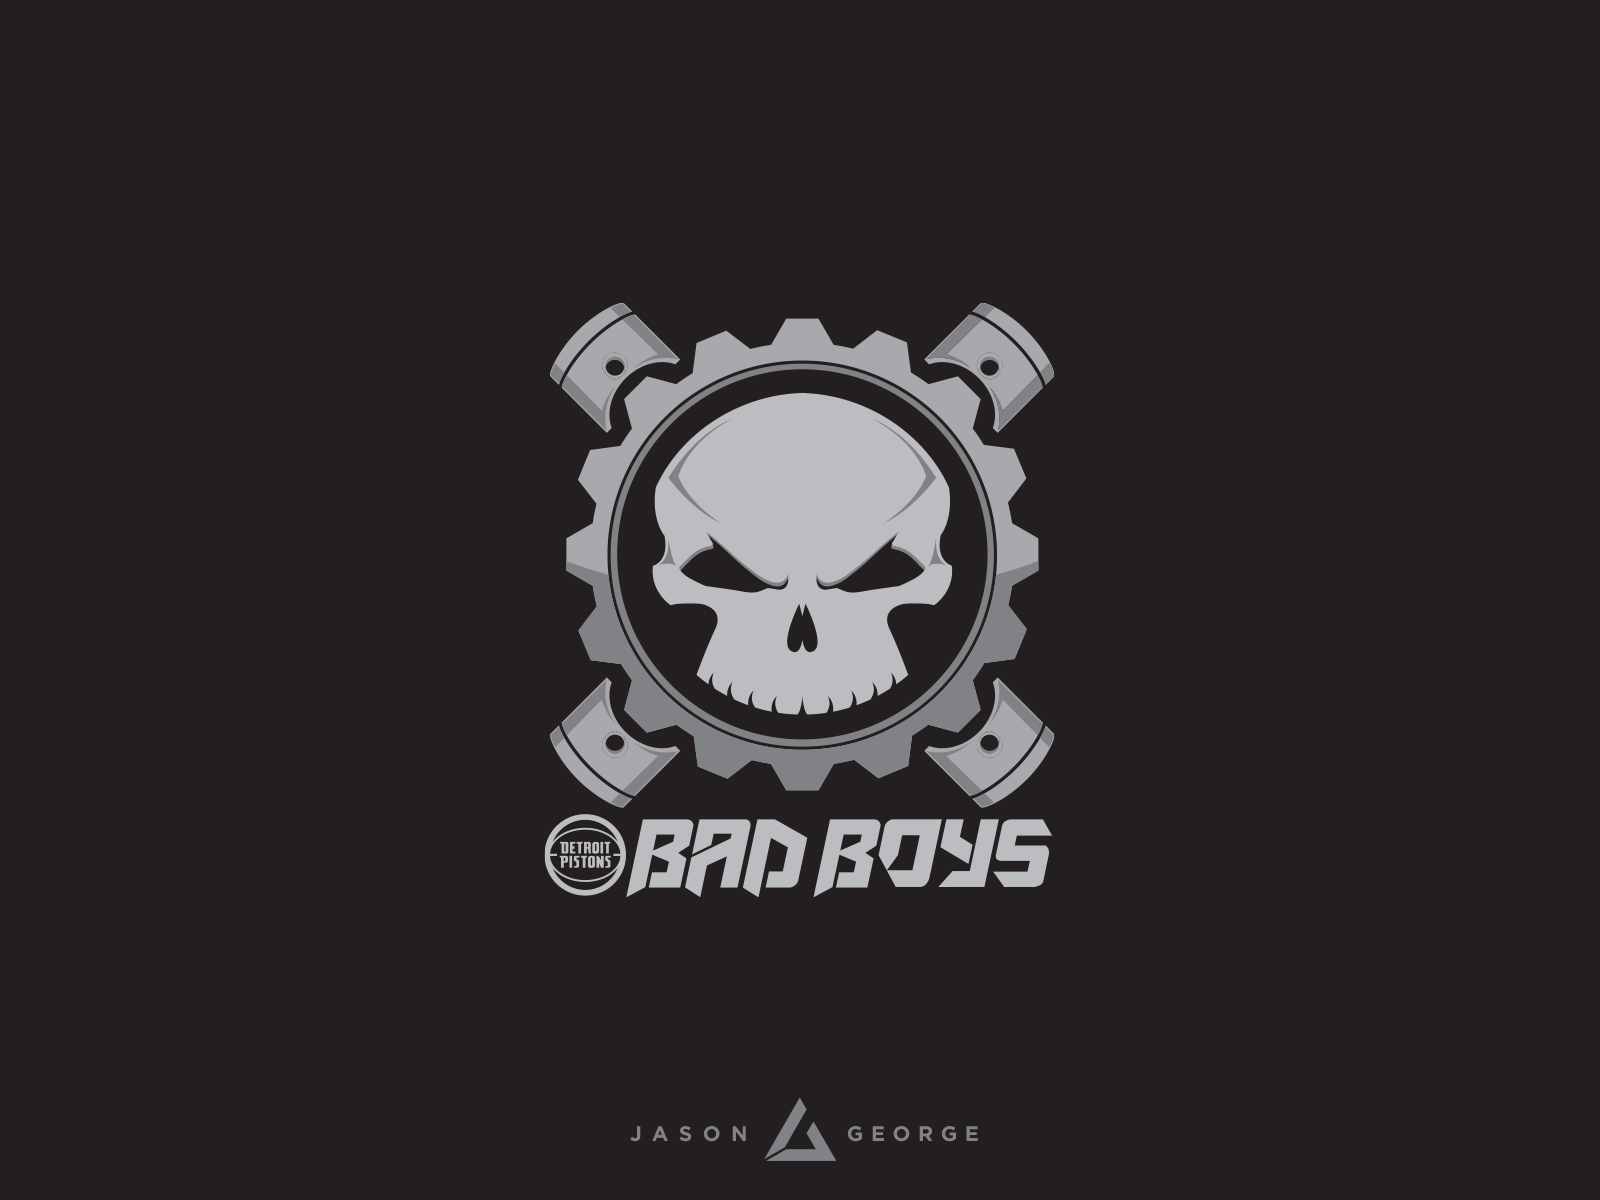 100,000 Bad boy logo Vector Images | Depositphotos